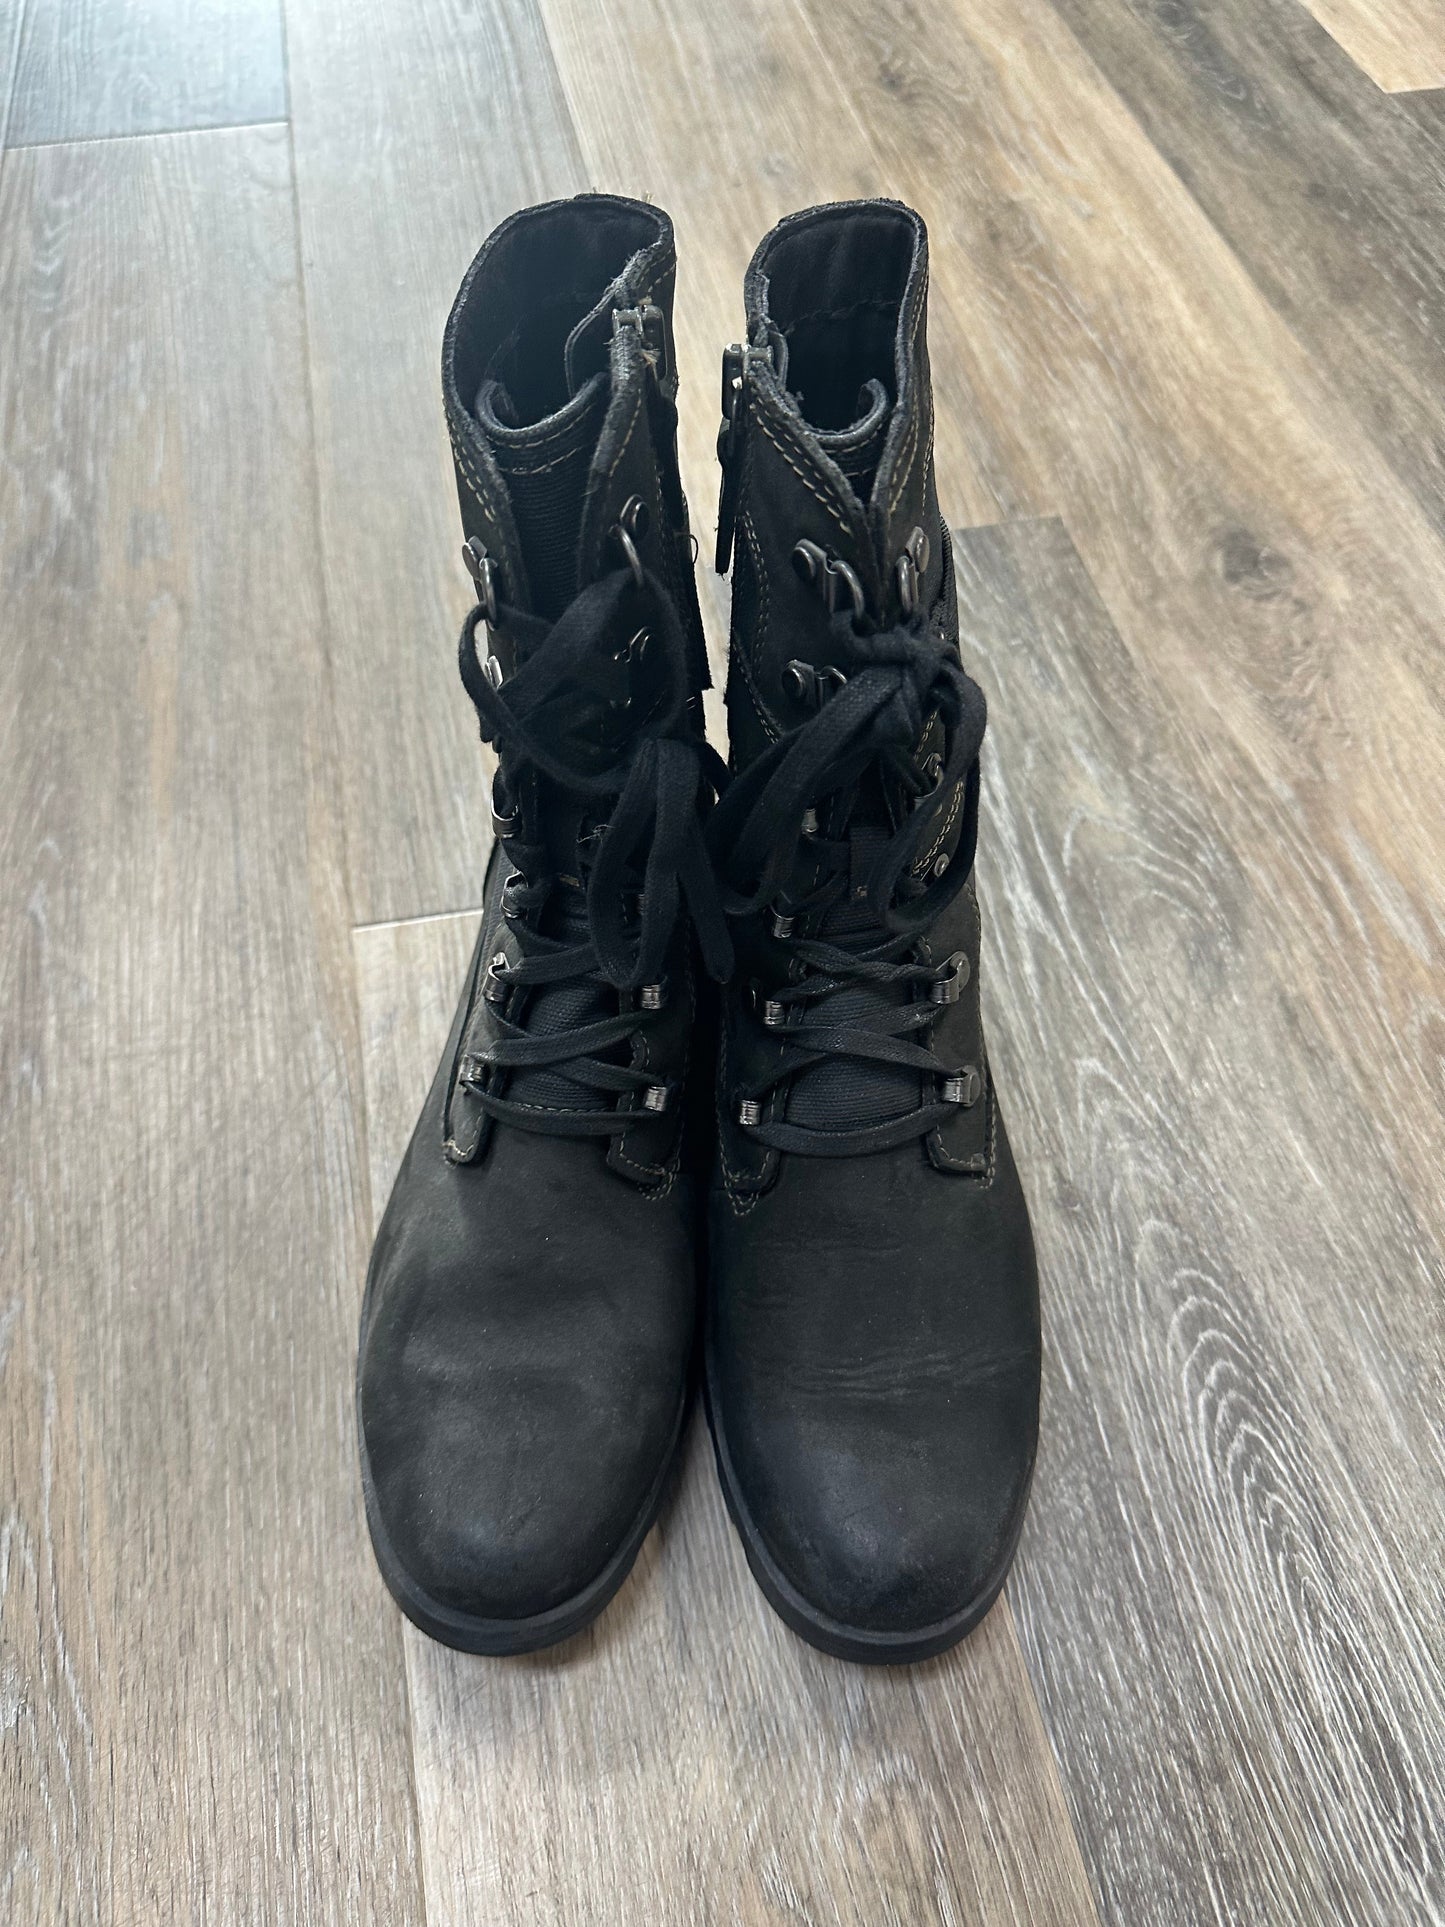 Black Boots Ankle Flats Sorel, Size 8.5